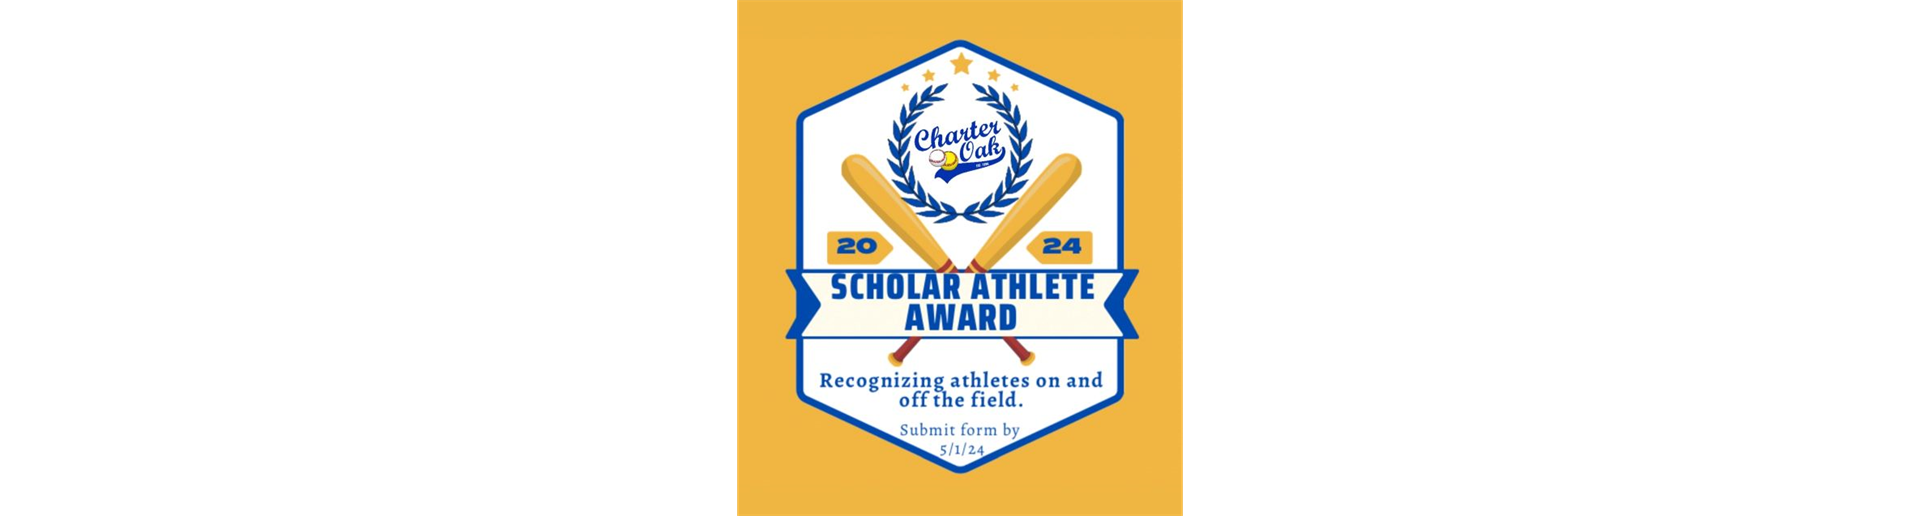 Scholar Athlete Award Form 